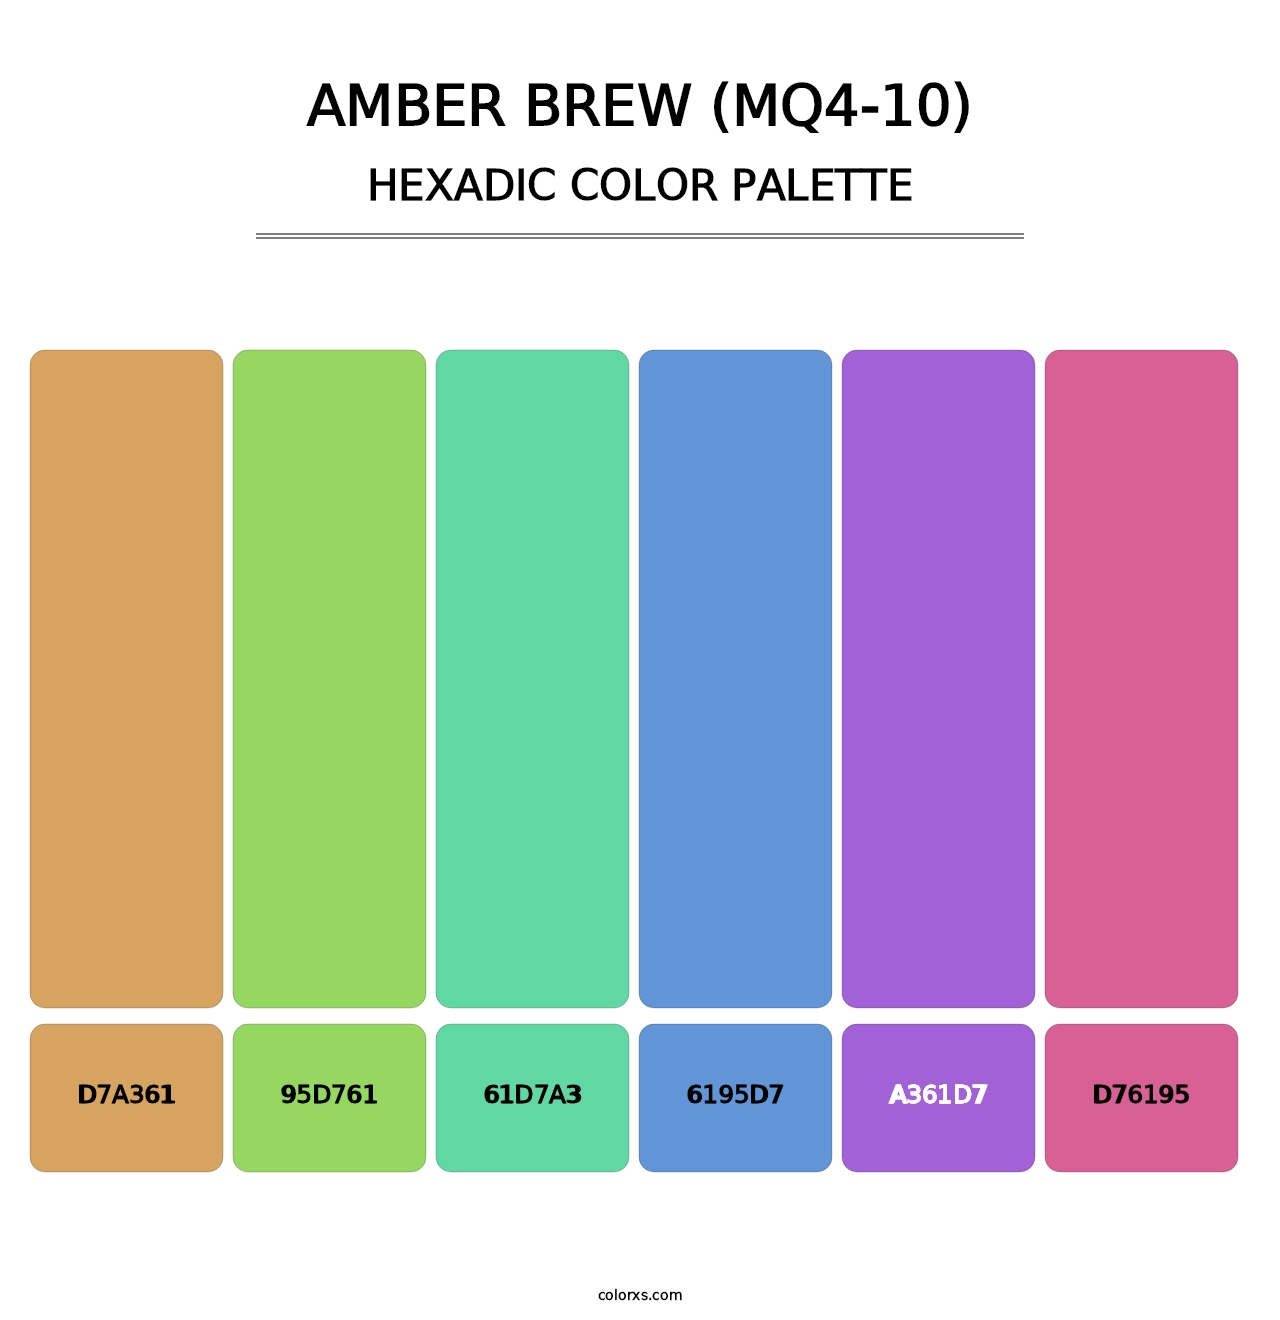 Amber Brew (MQ4-10) - Hexadic Color Palette